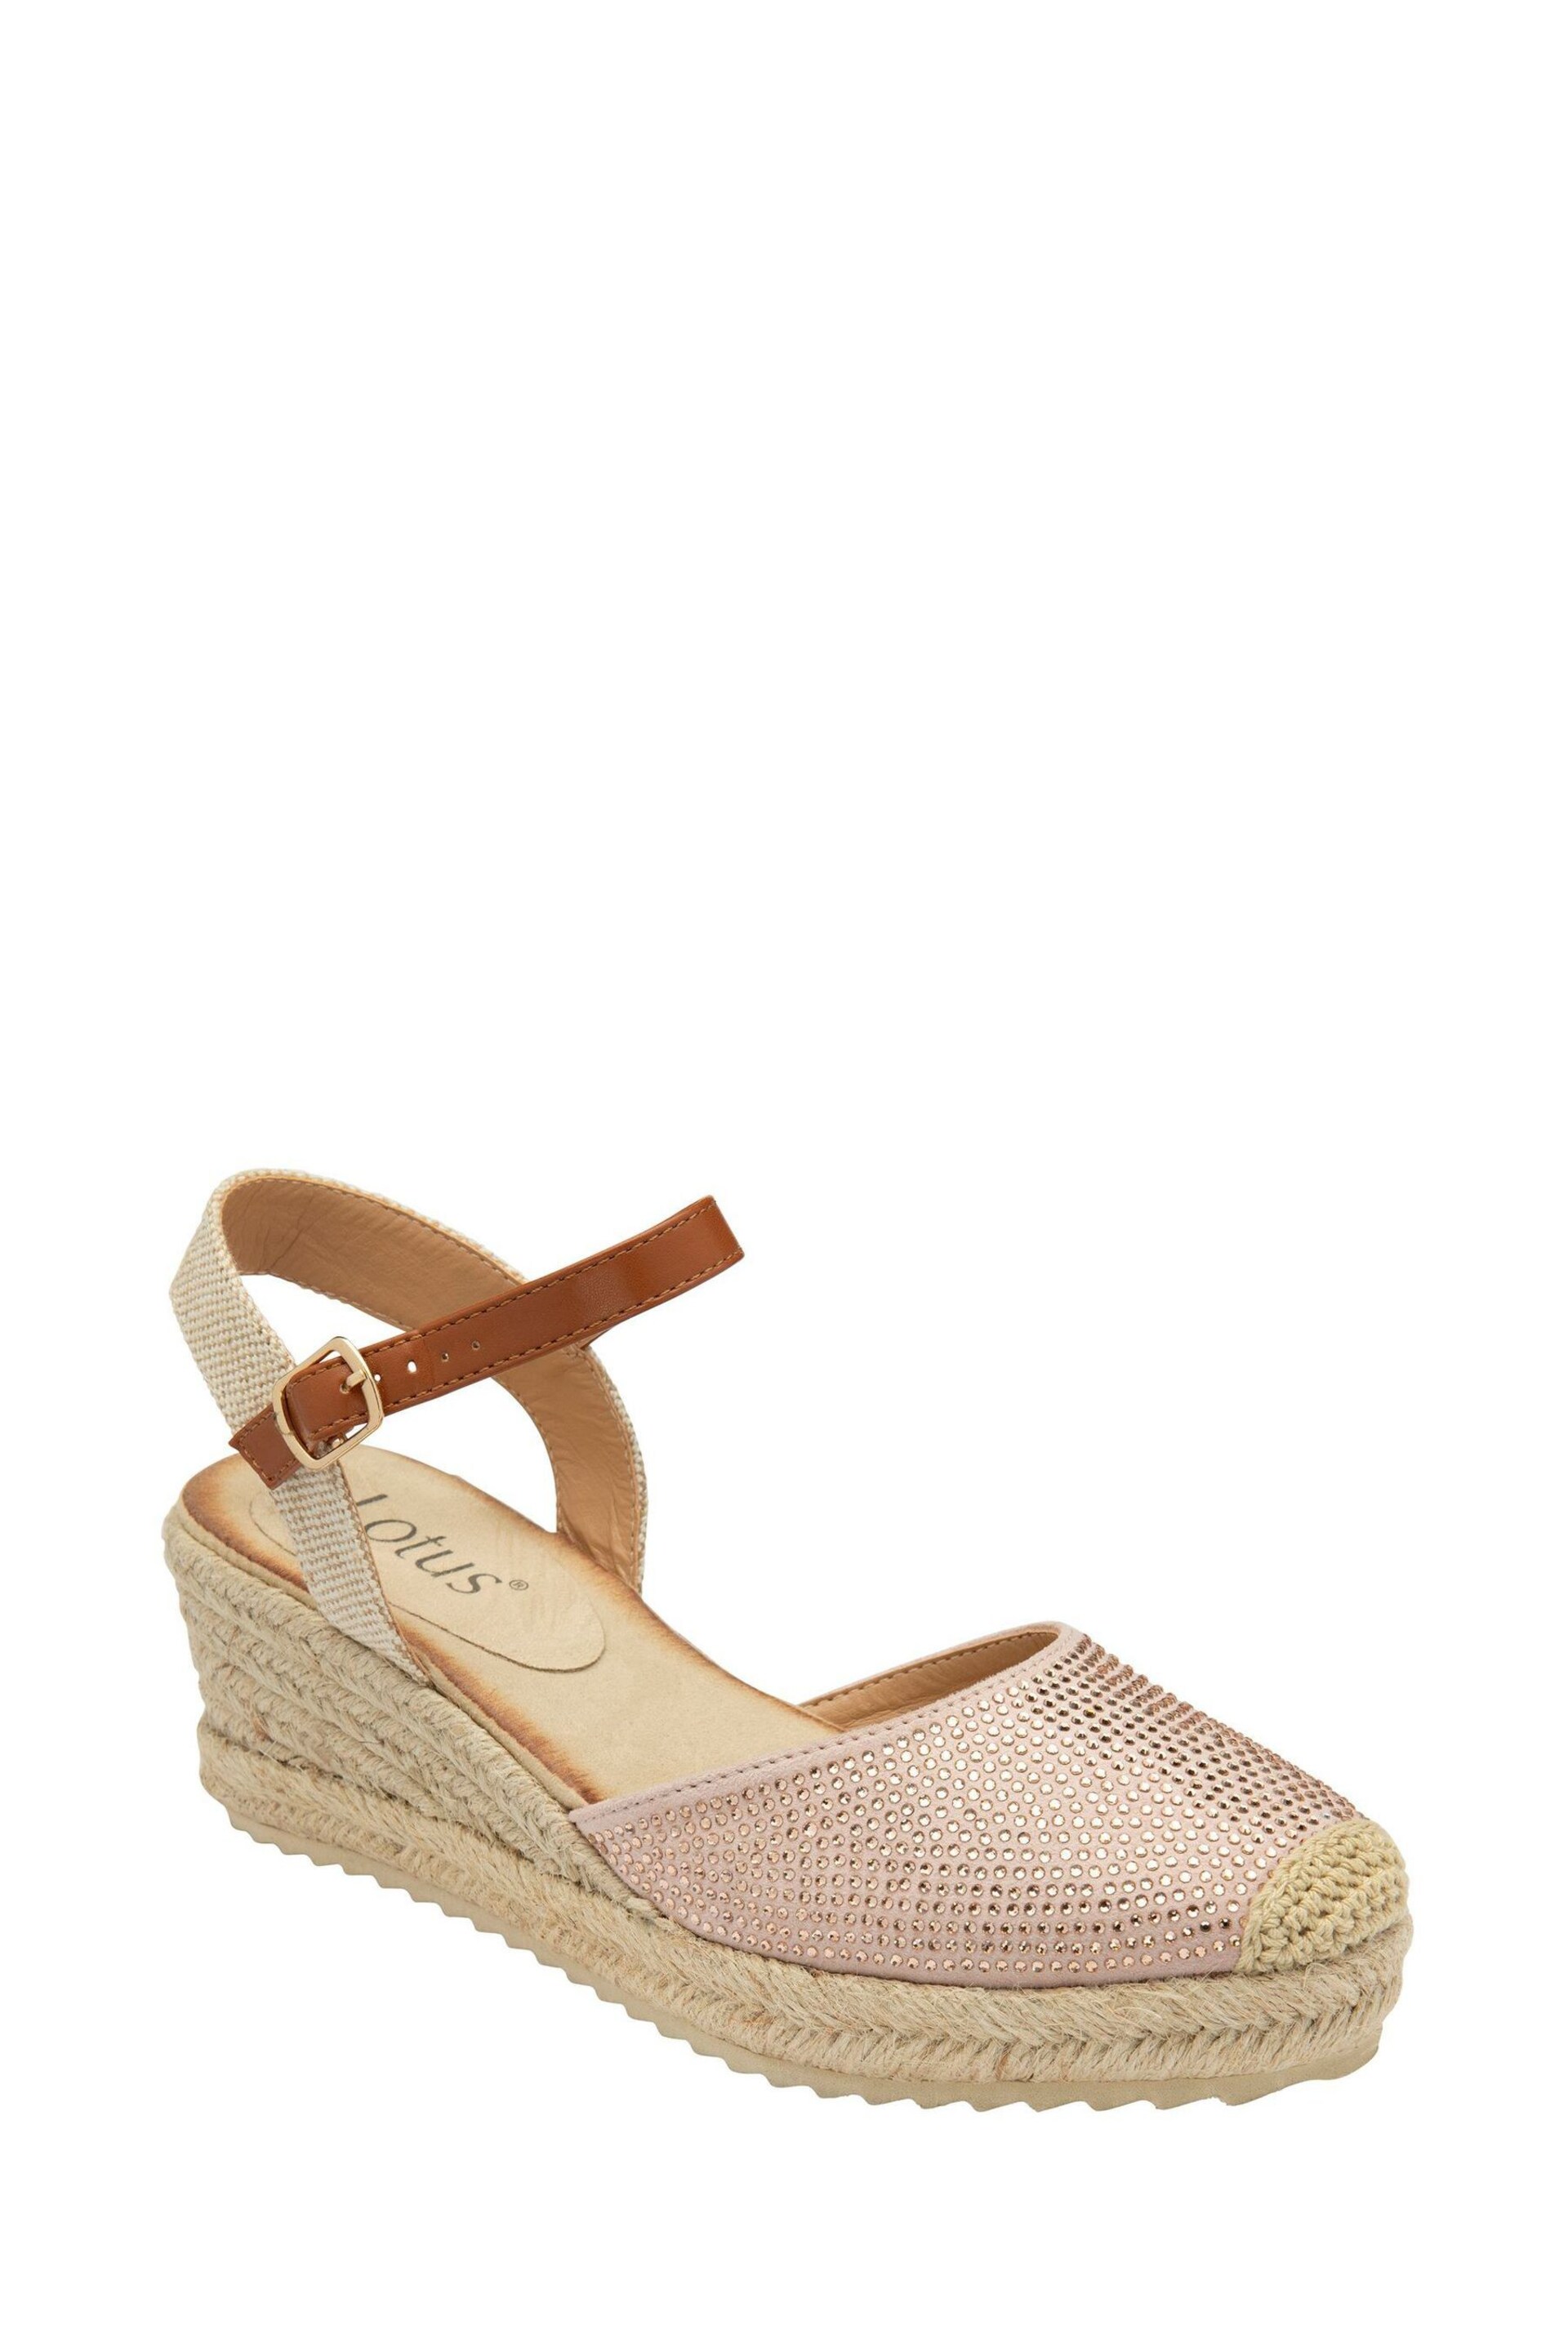 Lotus Pink/Cream Espadrille Wedge Sandals - Image 1 of 4